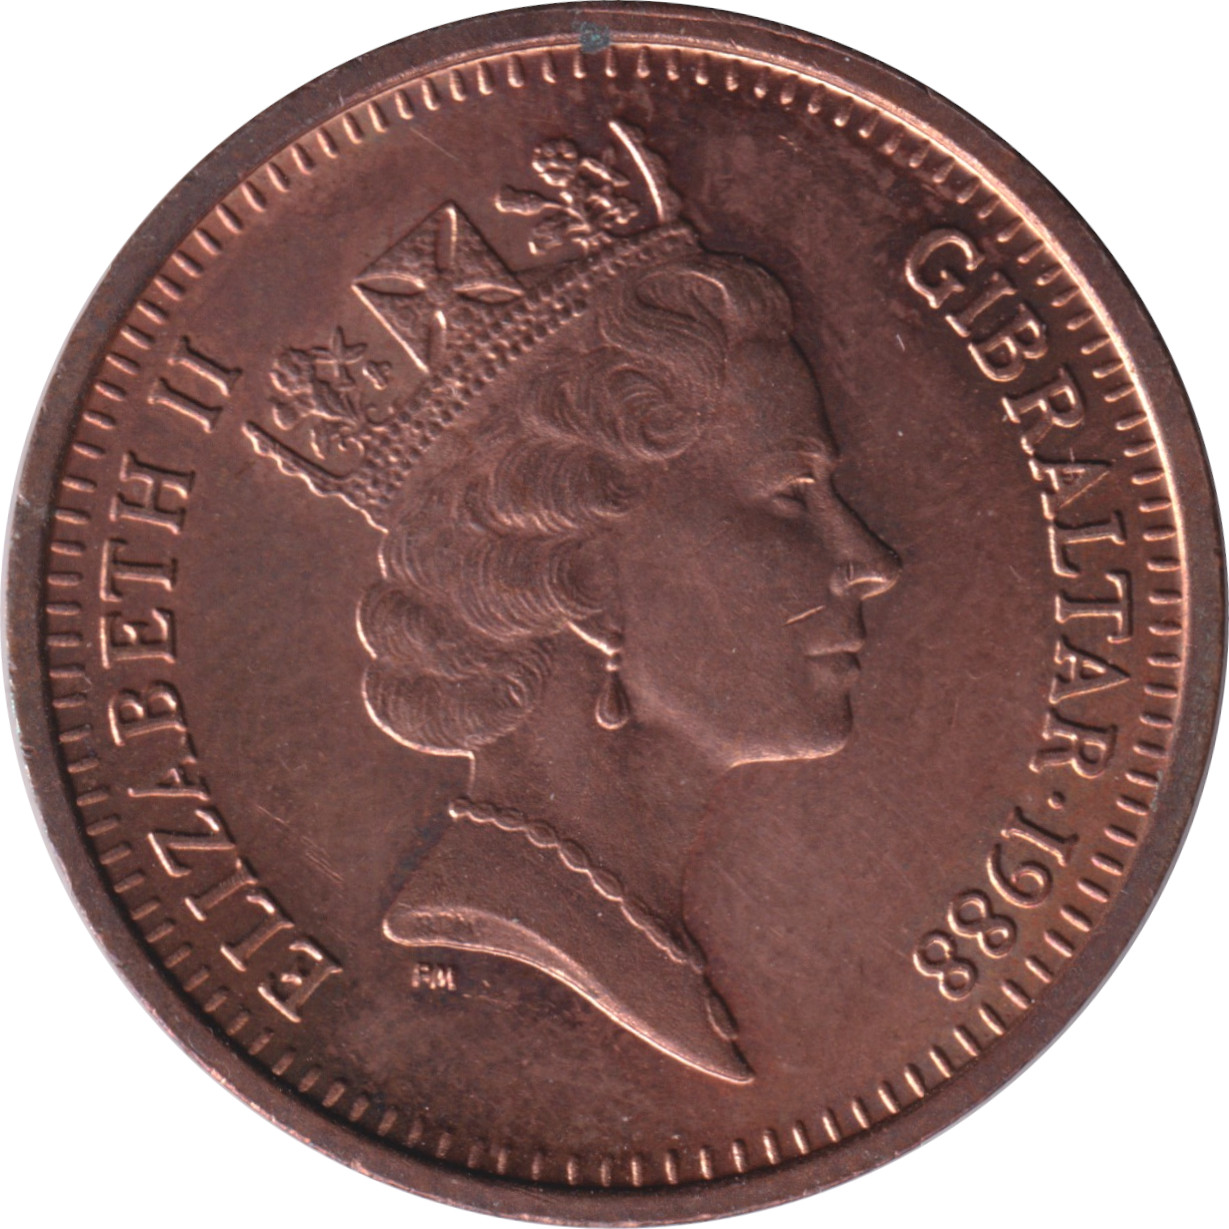 2 pence - Elizabeth II - Mature head